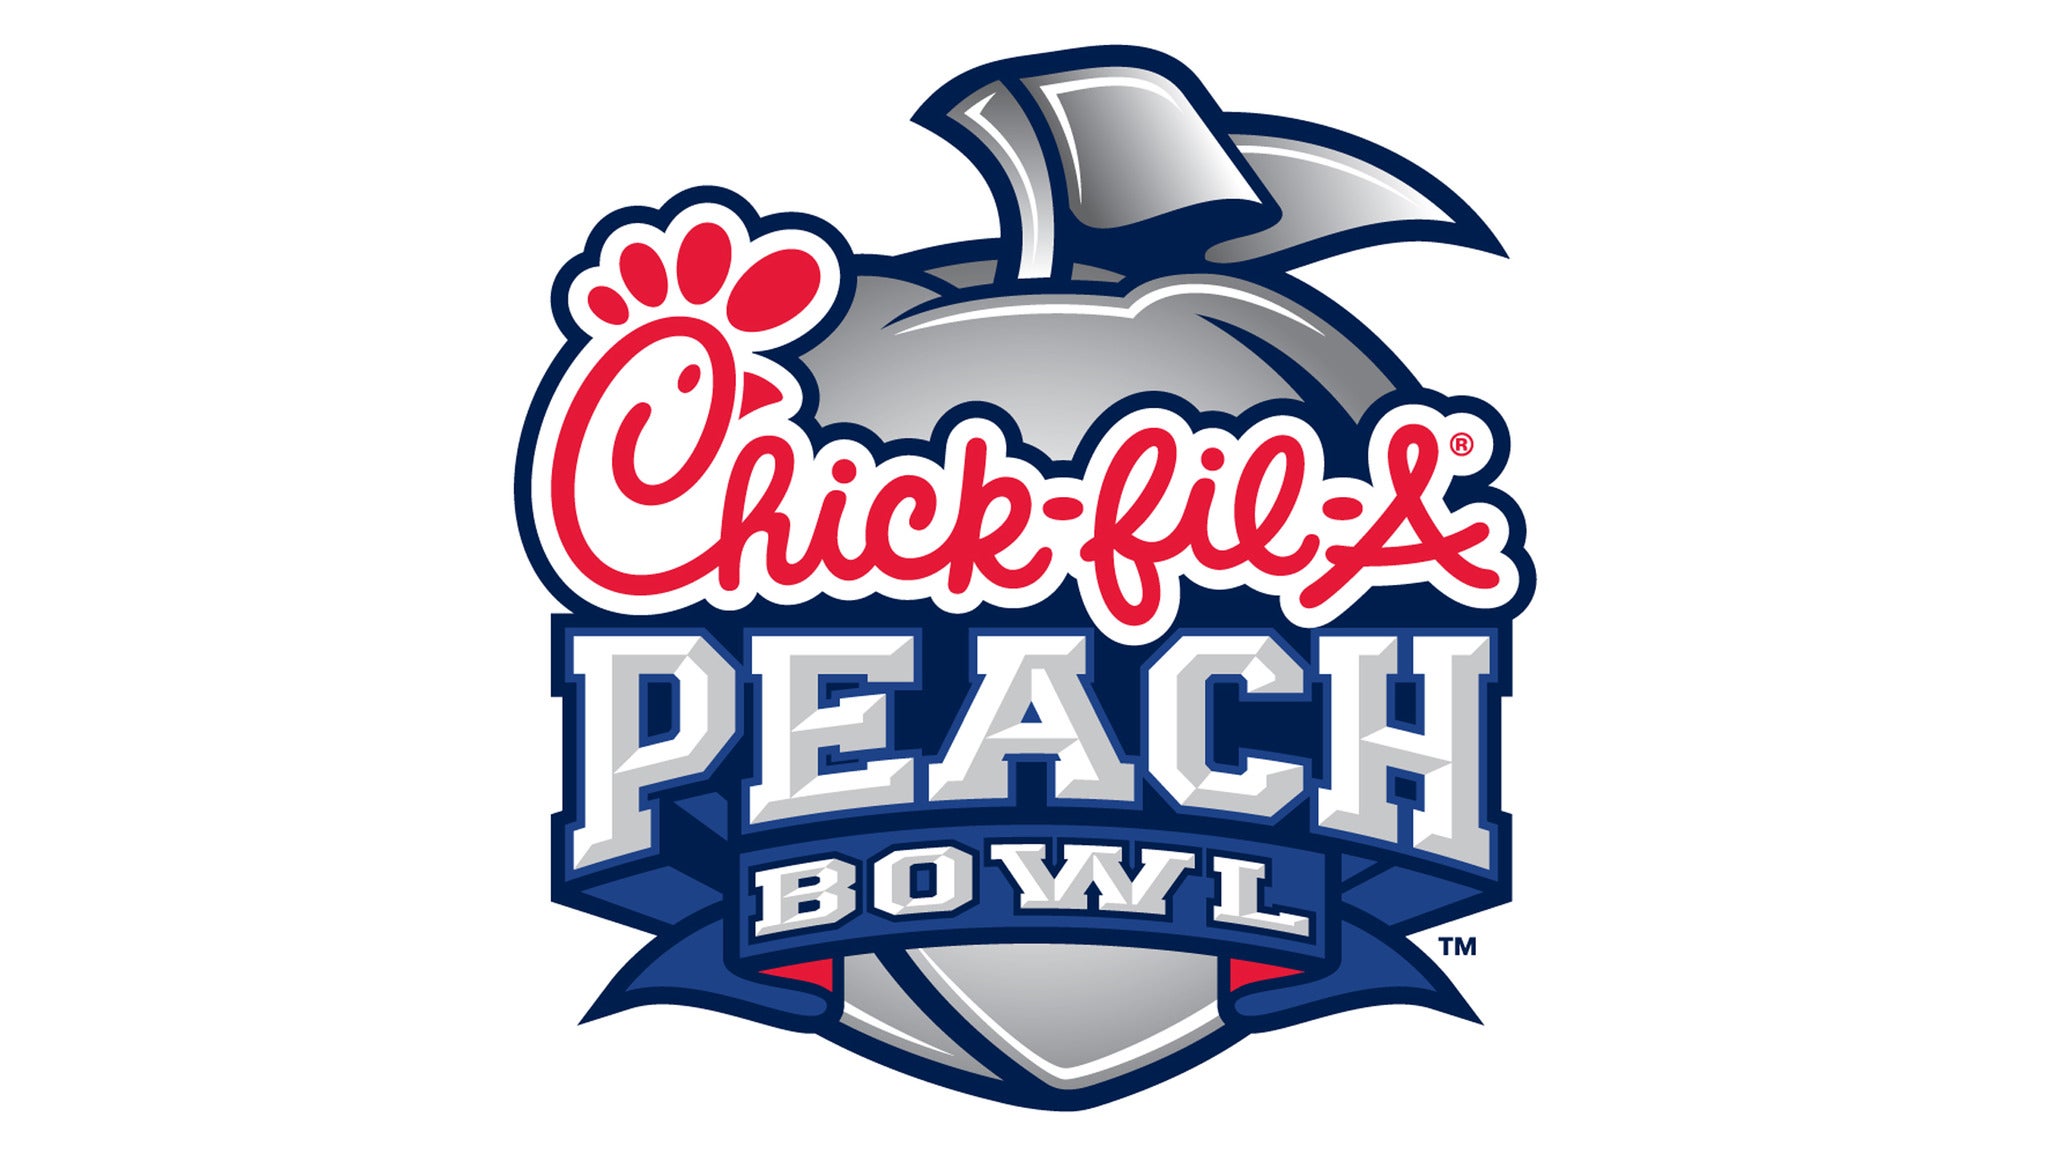 2022 Chick-fil-a Peach Bowl at Mercedes-Benz Stadium